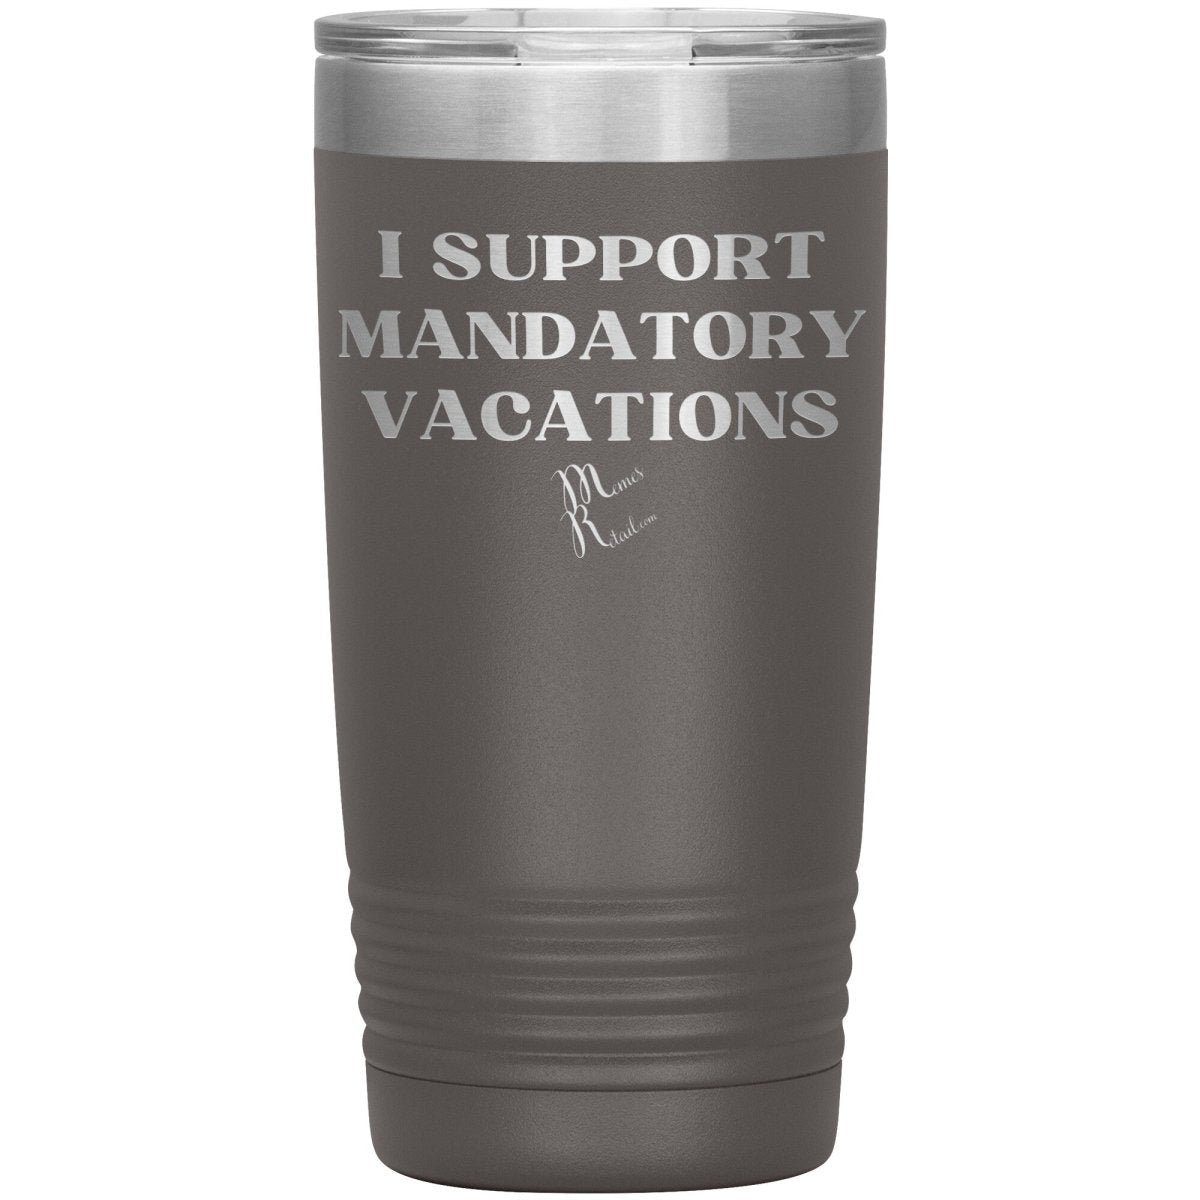 I support mandatory vacations Tumblers, 20oz Insulated Tumbler / Pewter - MemesRetail.com